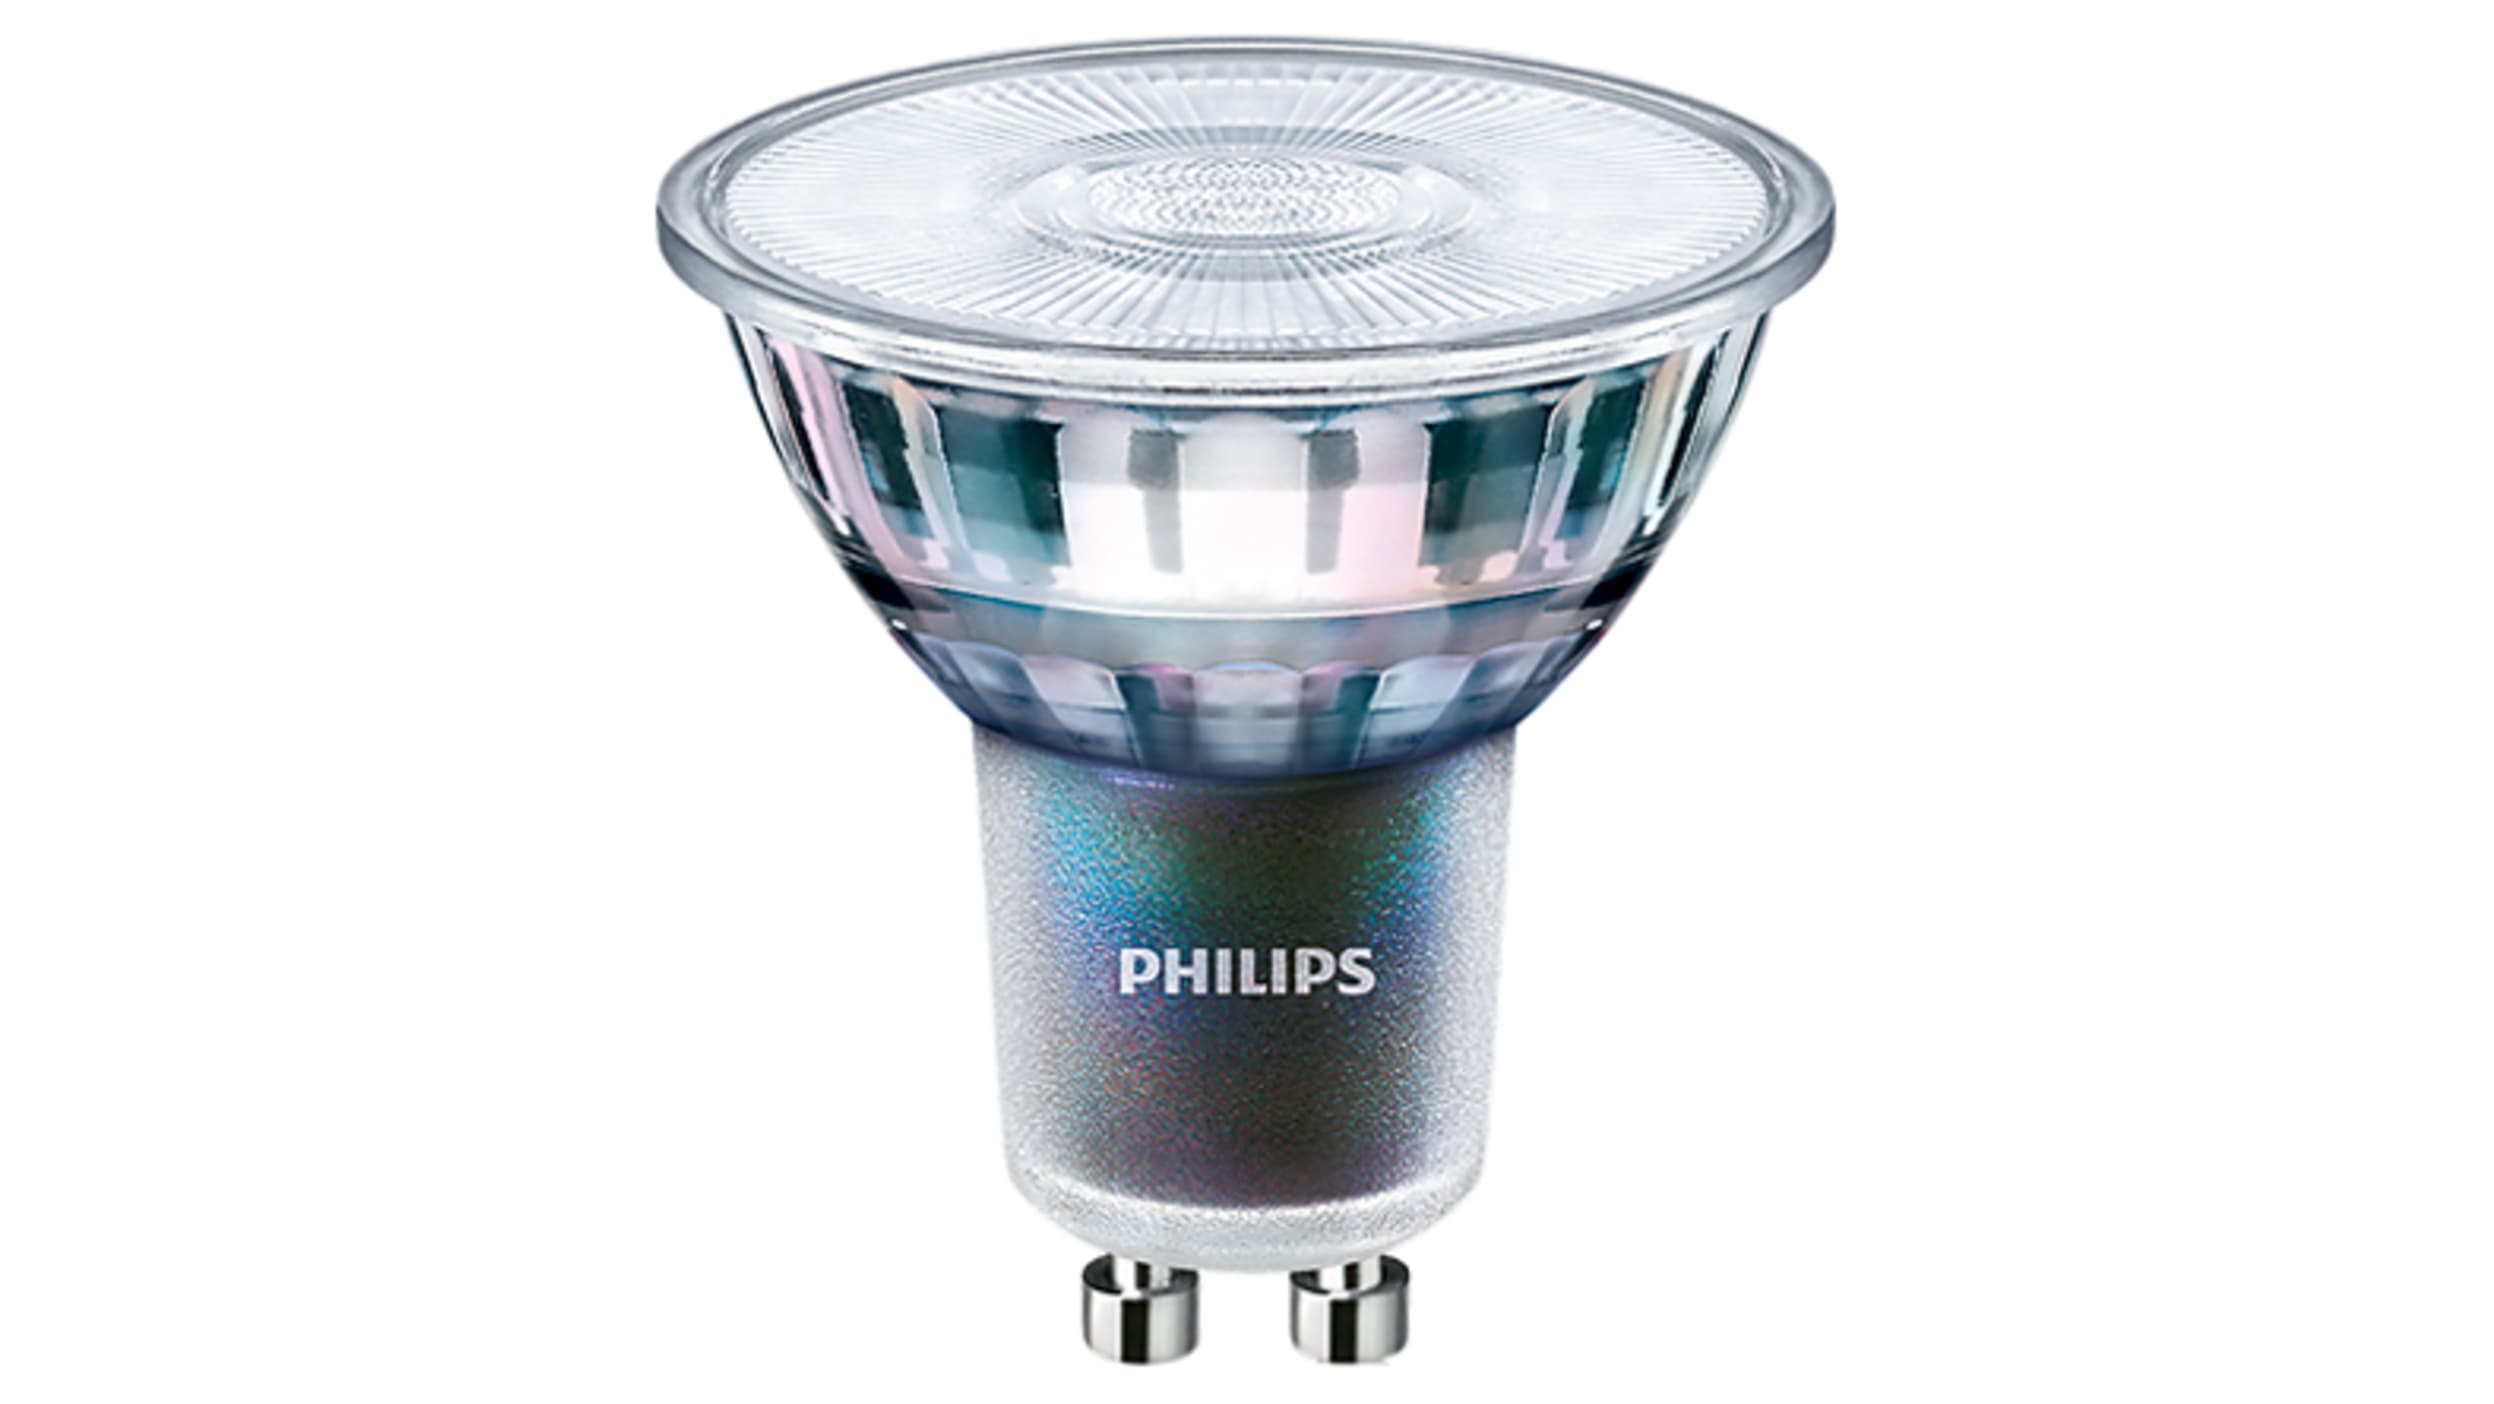 Modsatte tankskib pengeoverførsel 929001346902 | Philips GU10 LED Reflector Lamp 3.9 W(35W), 4000K, Cool White,  Reflector shape | RS